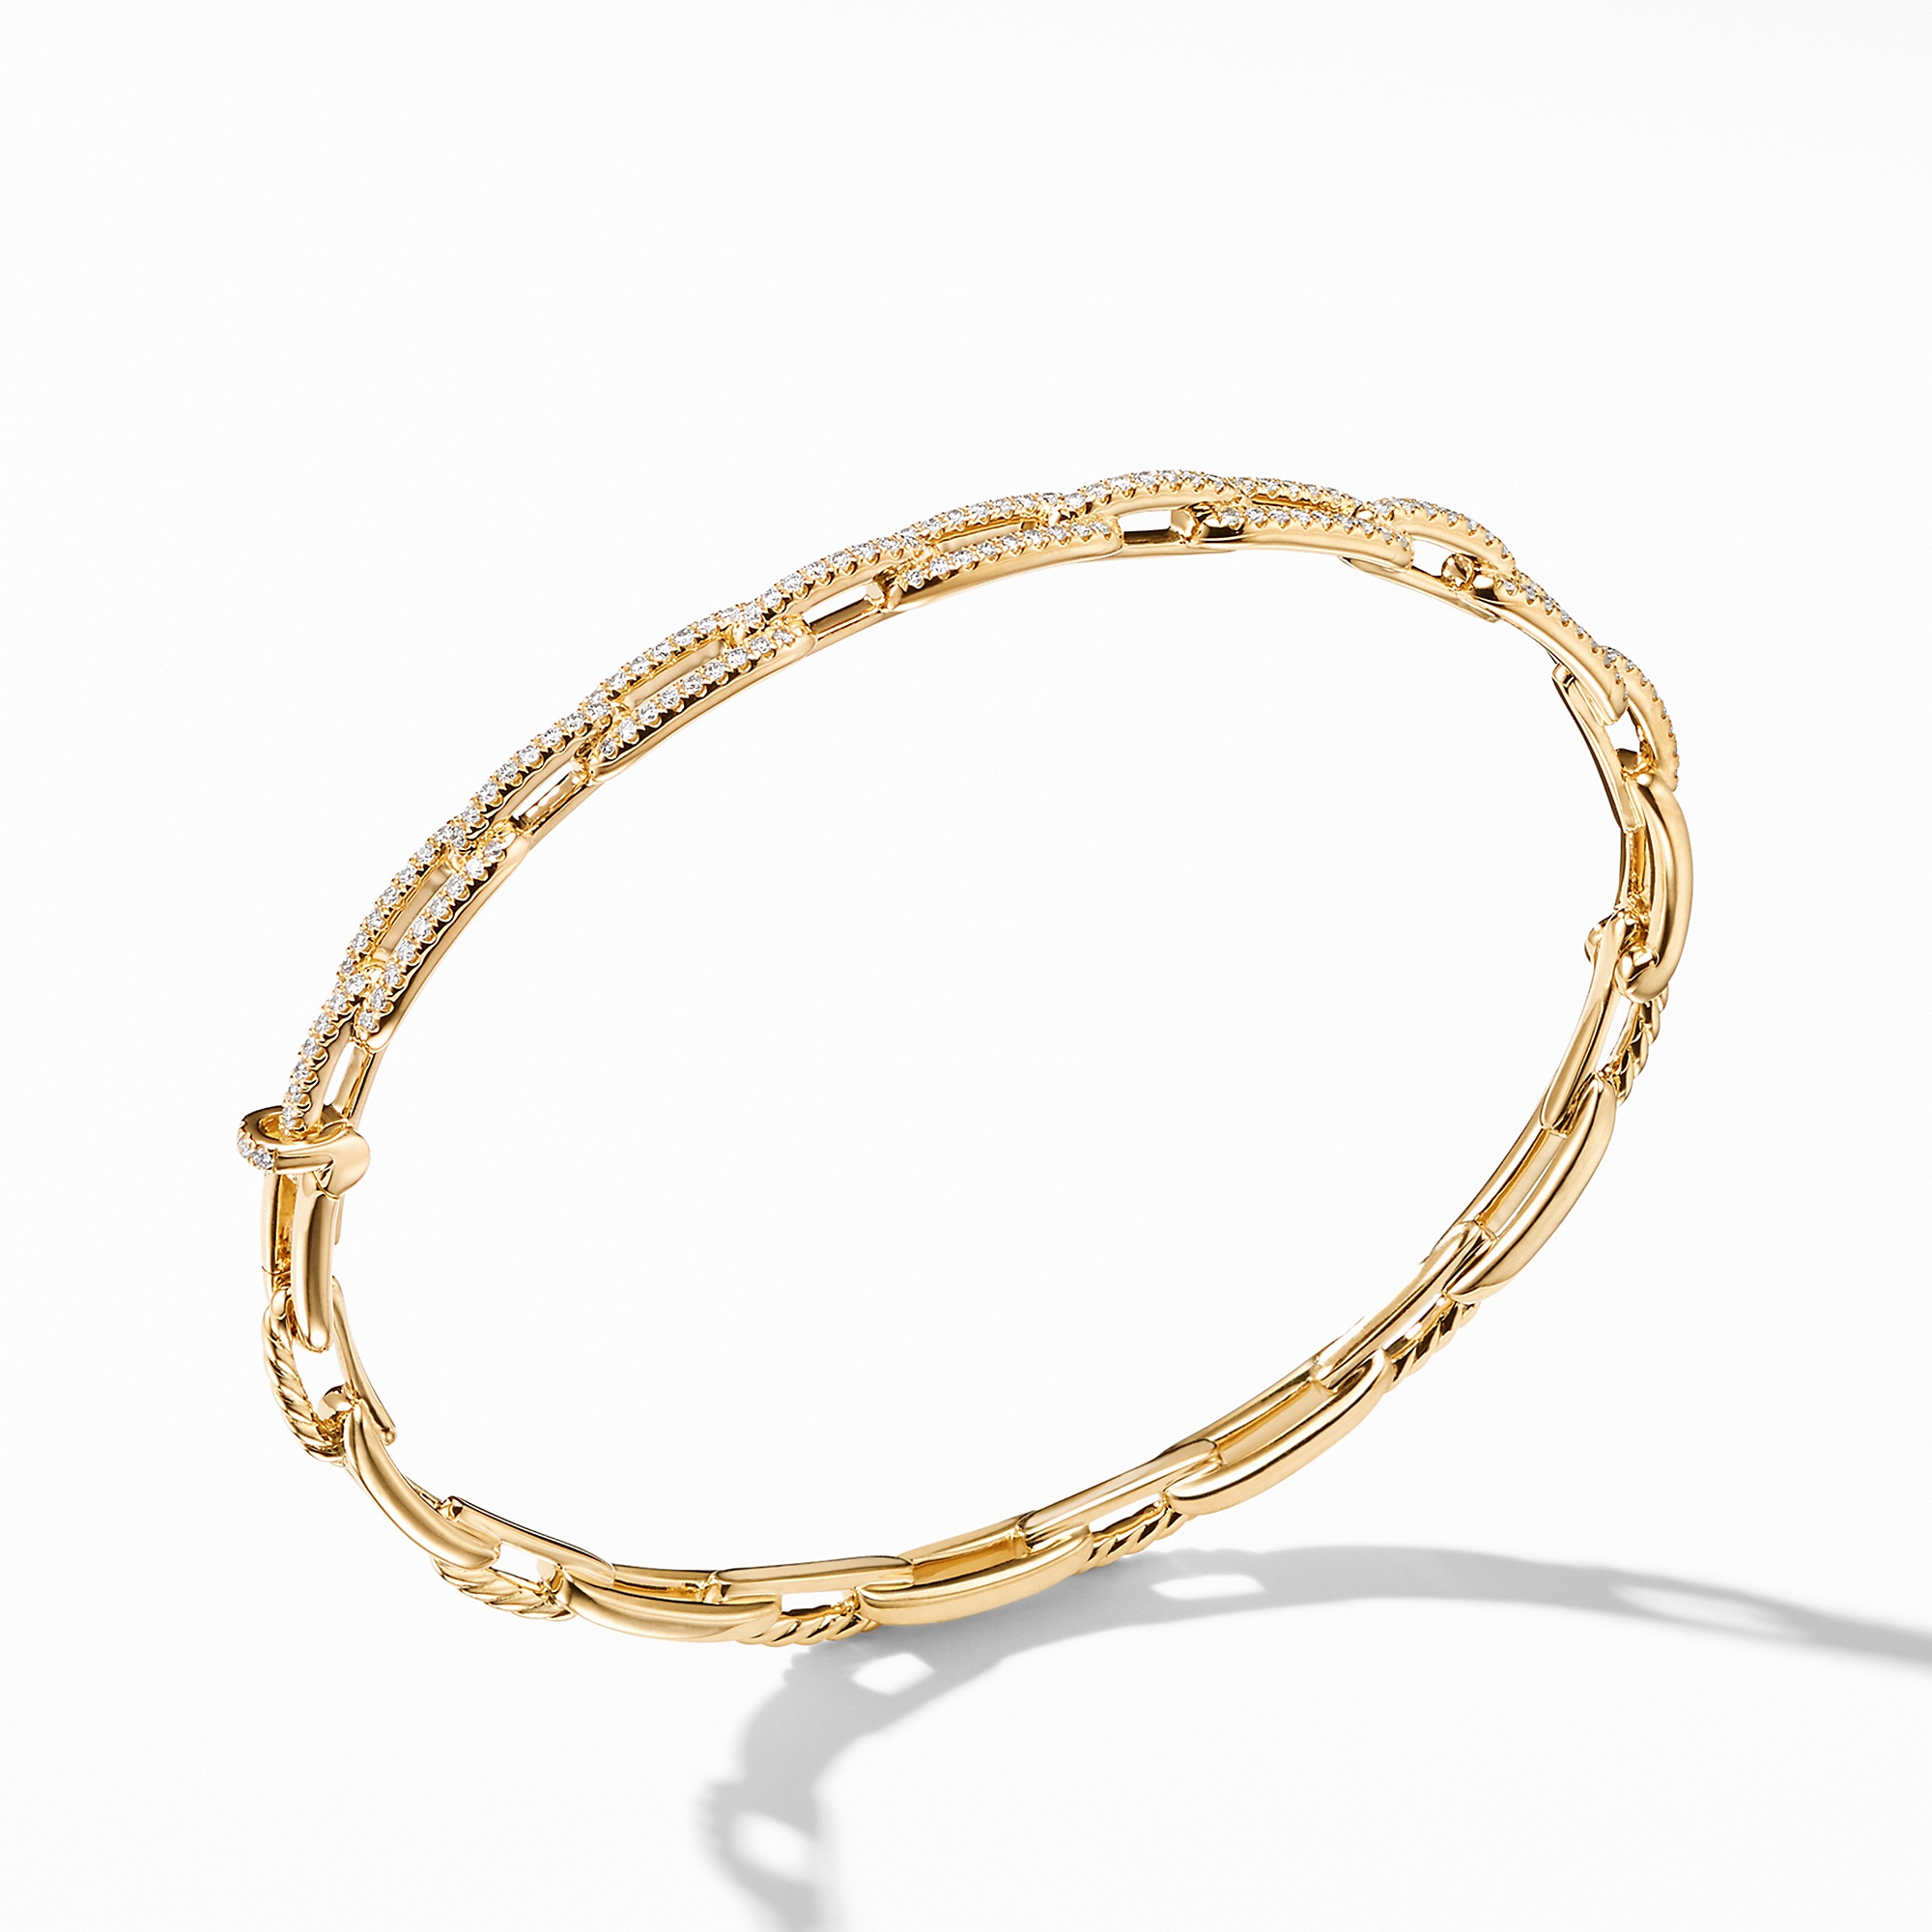 David Yurman Stax Chain Link Bracelet with Diamonds in 18K Gold 0